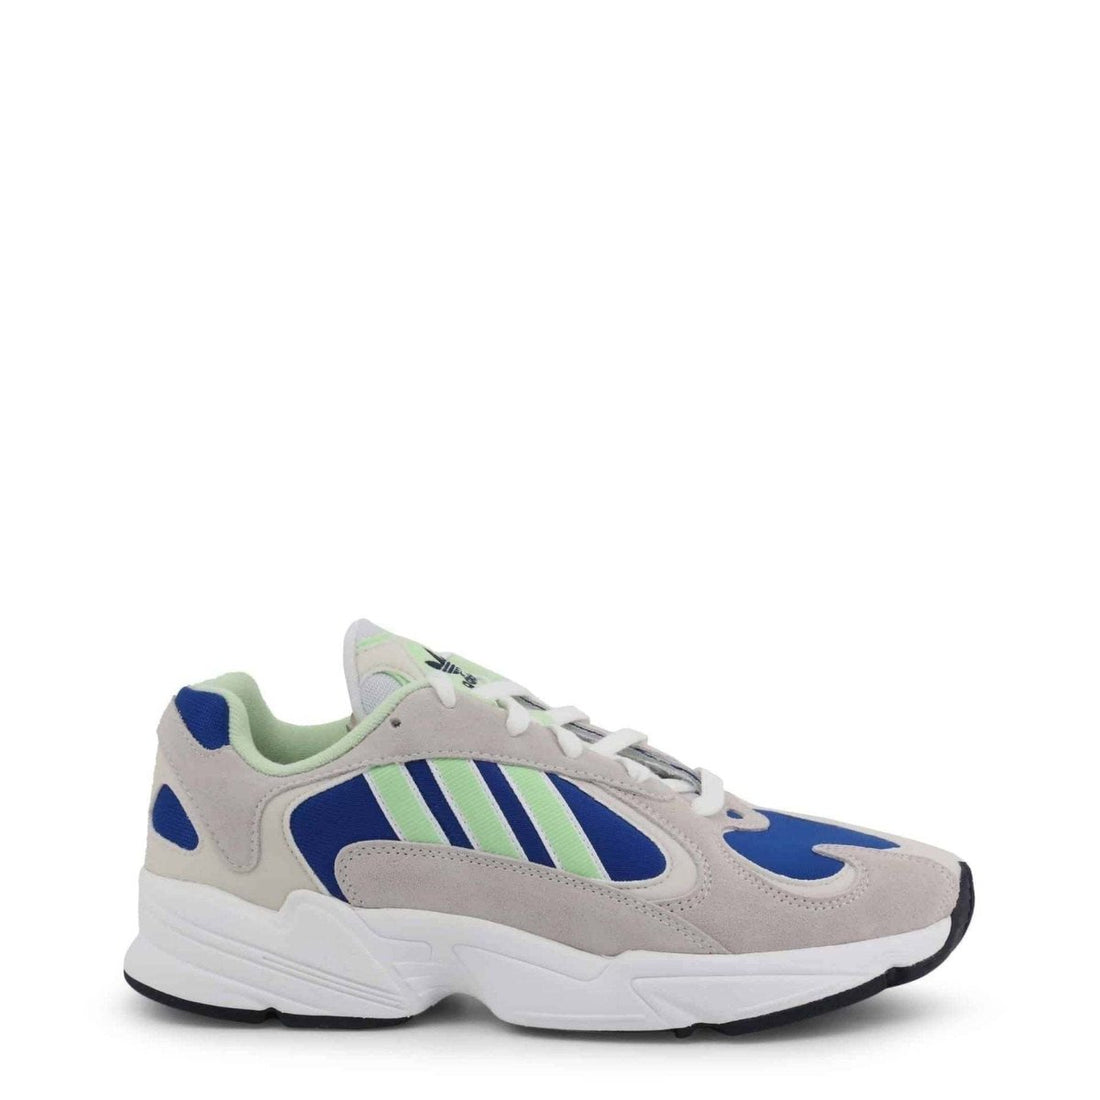 Adidas Sneakers - TINT - Sneakers - Adidas - EE5318_YUNG-1:293365